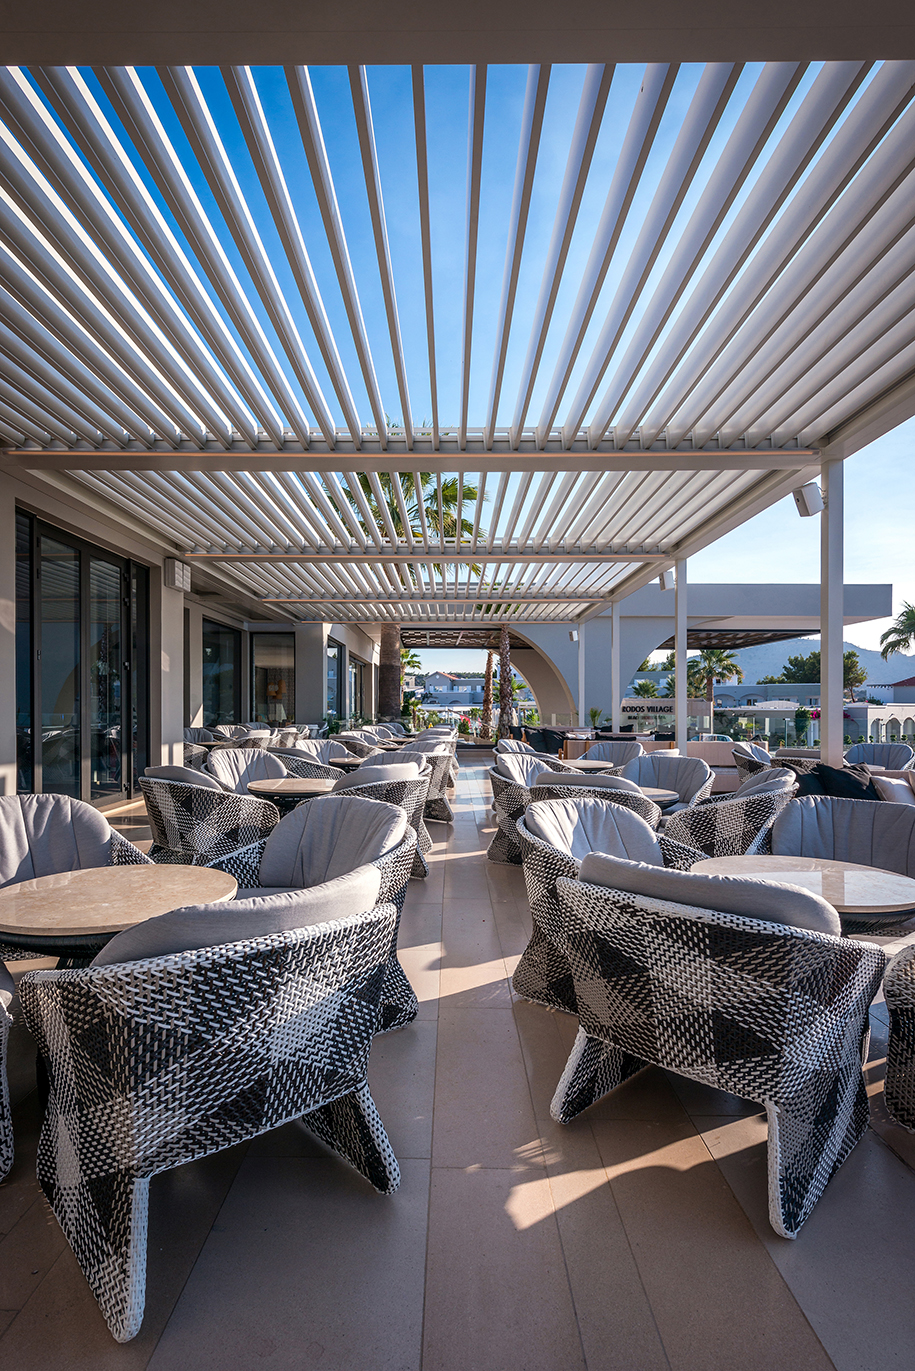 Archisearch Mitsis Rodos Village Beach Hotel & Spa revamping and interior design by MKV Design